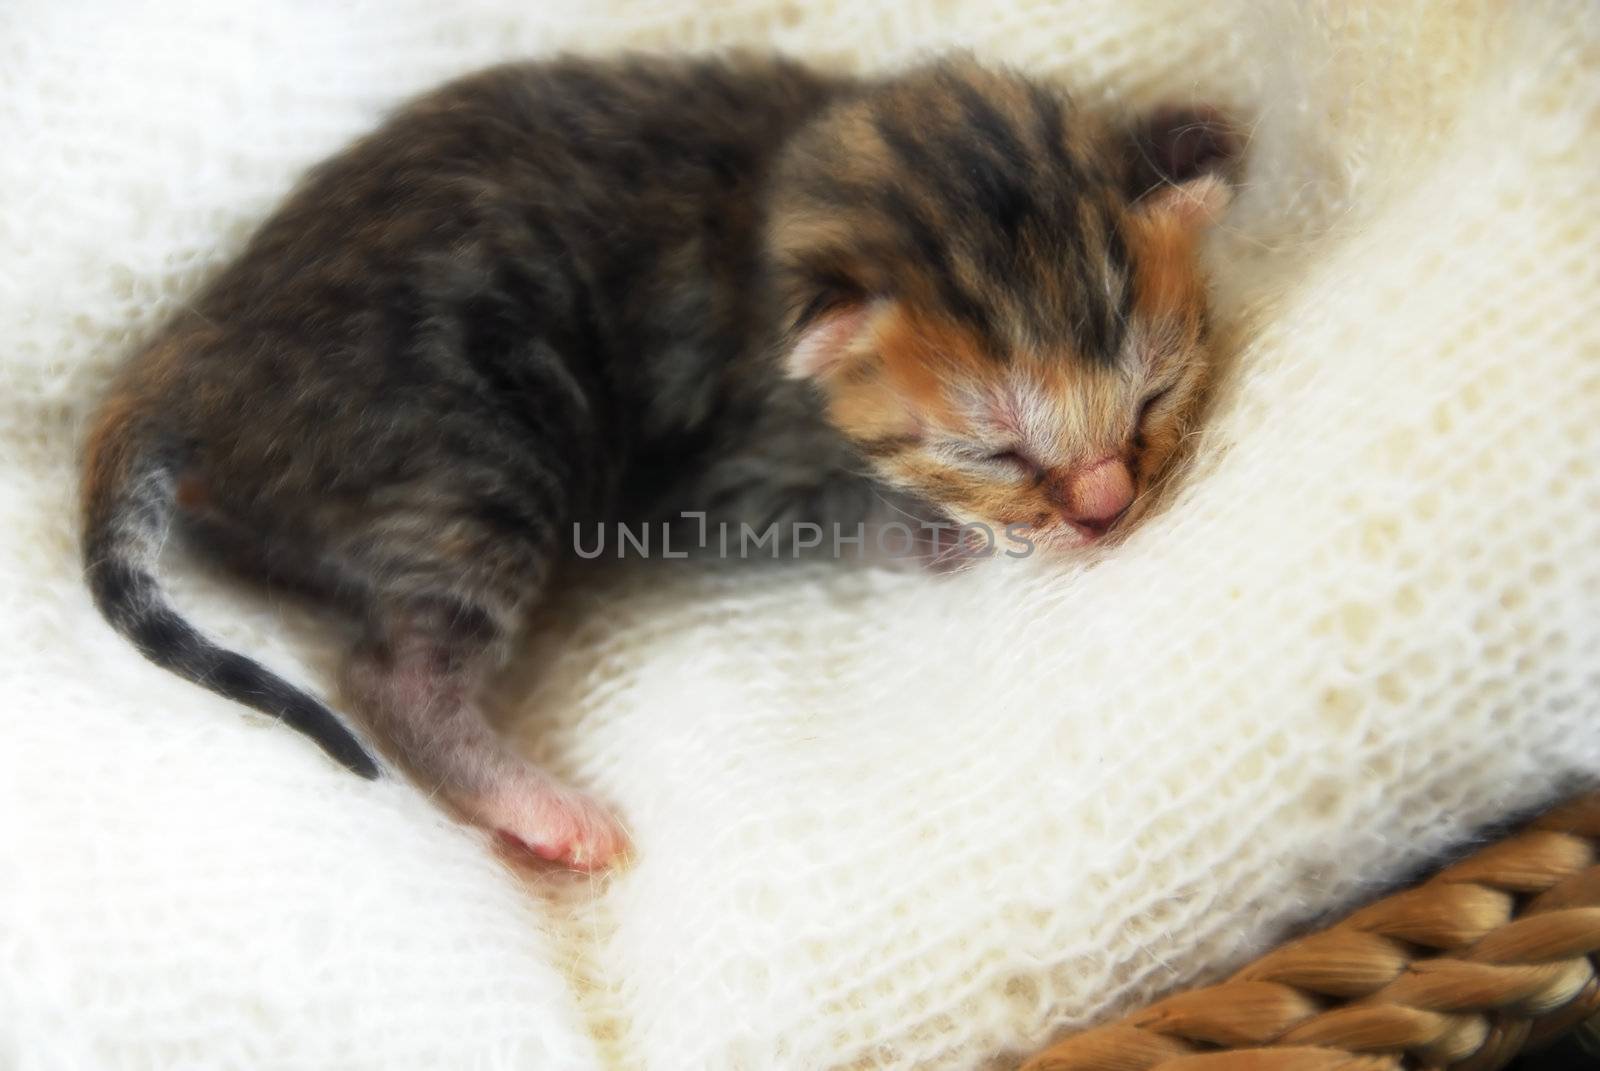 newborn blind baby cat sleeping on soft wool blanket